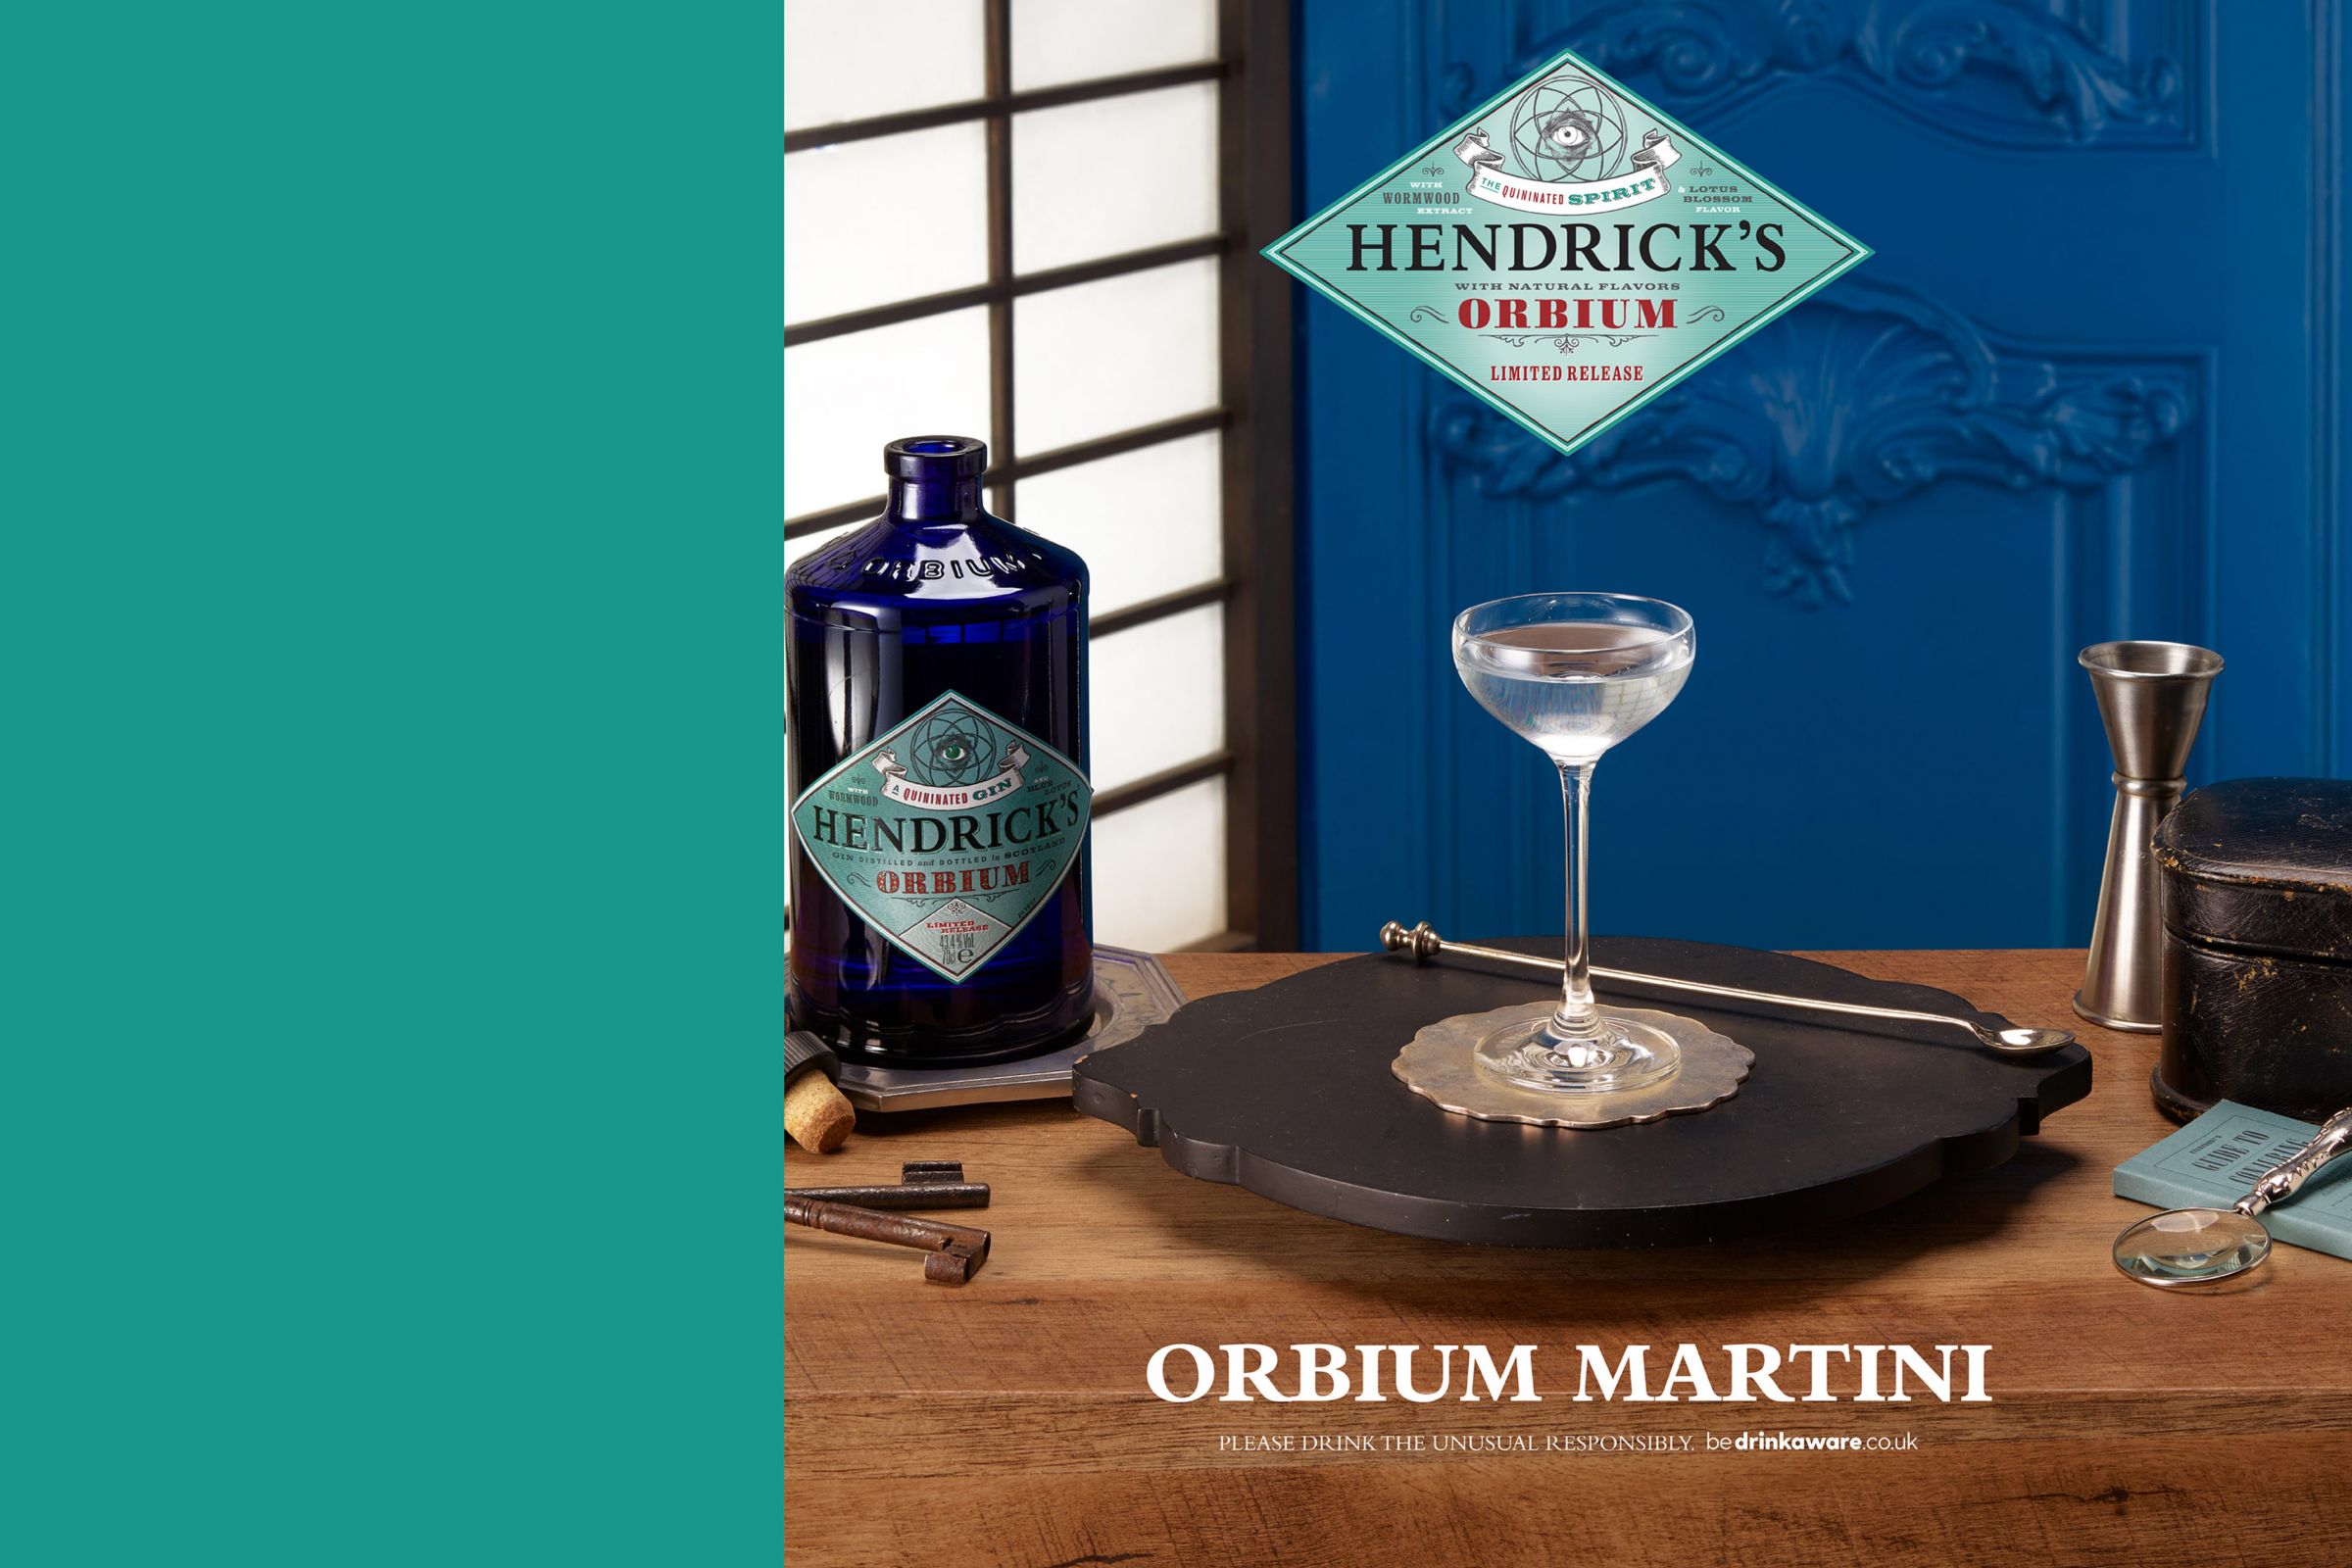 Image of a orbium martini cocktail